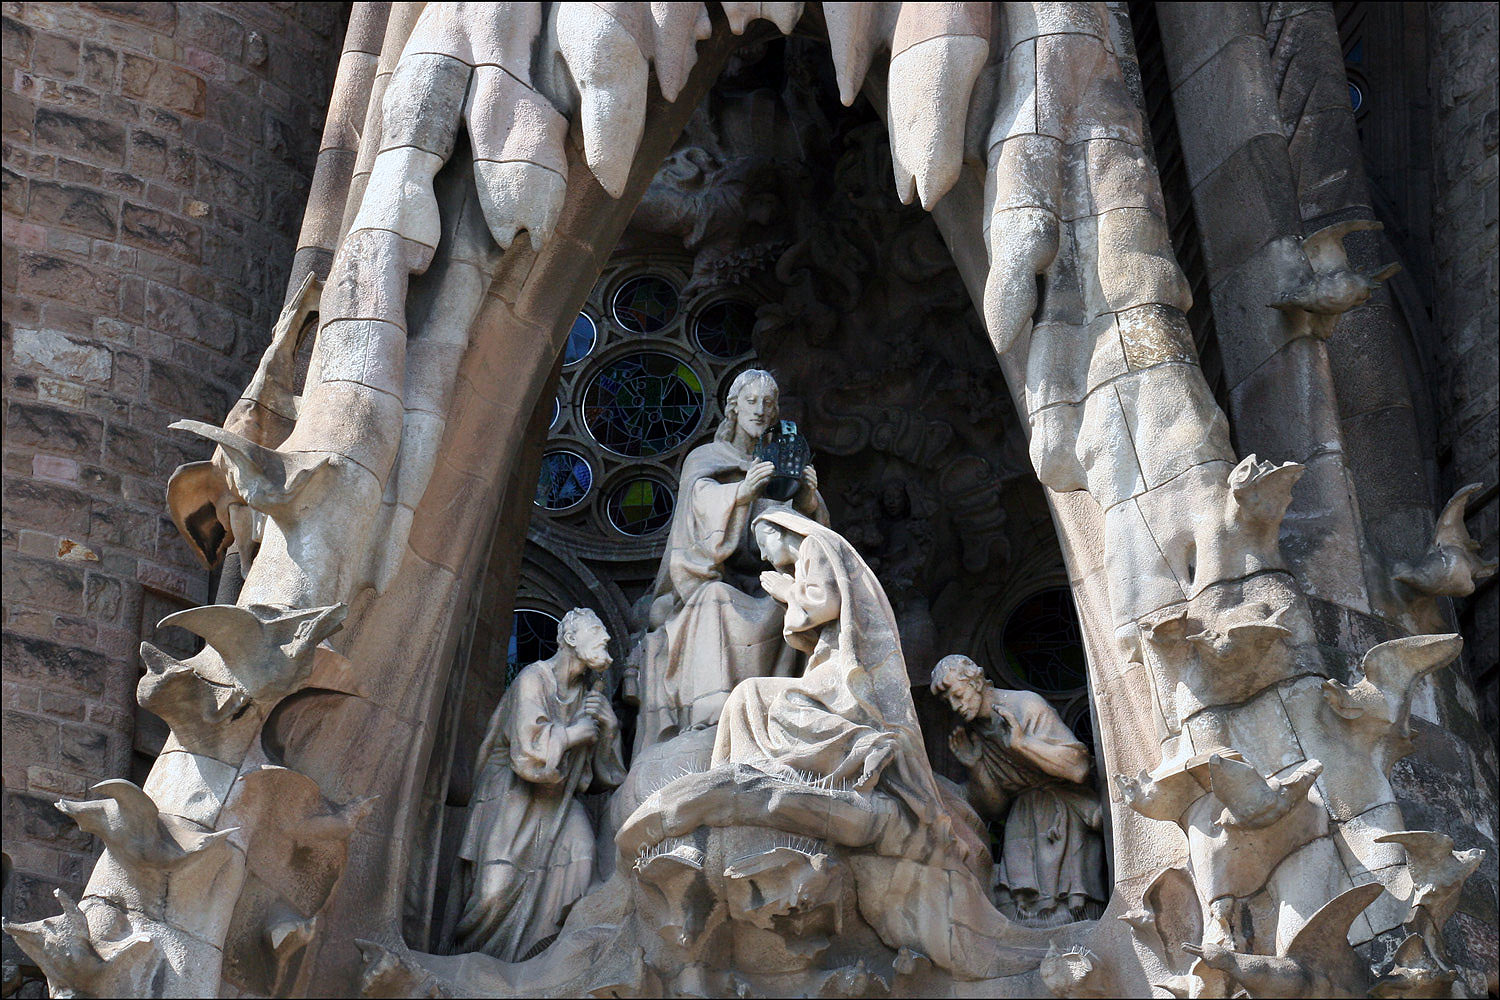 Sagrada Familia by Gaudi - Basilica in Barcelona, Spain - 137 Year Project 100